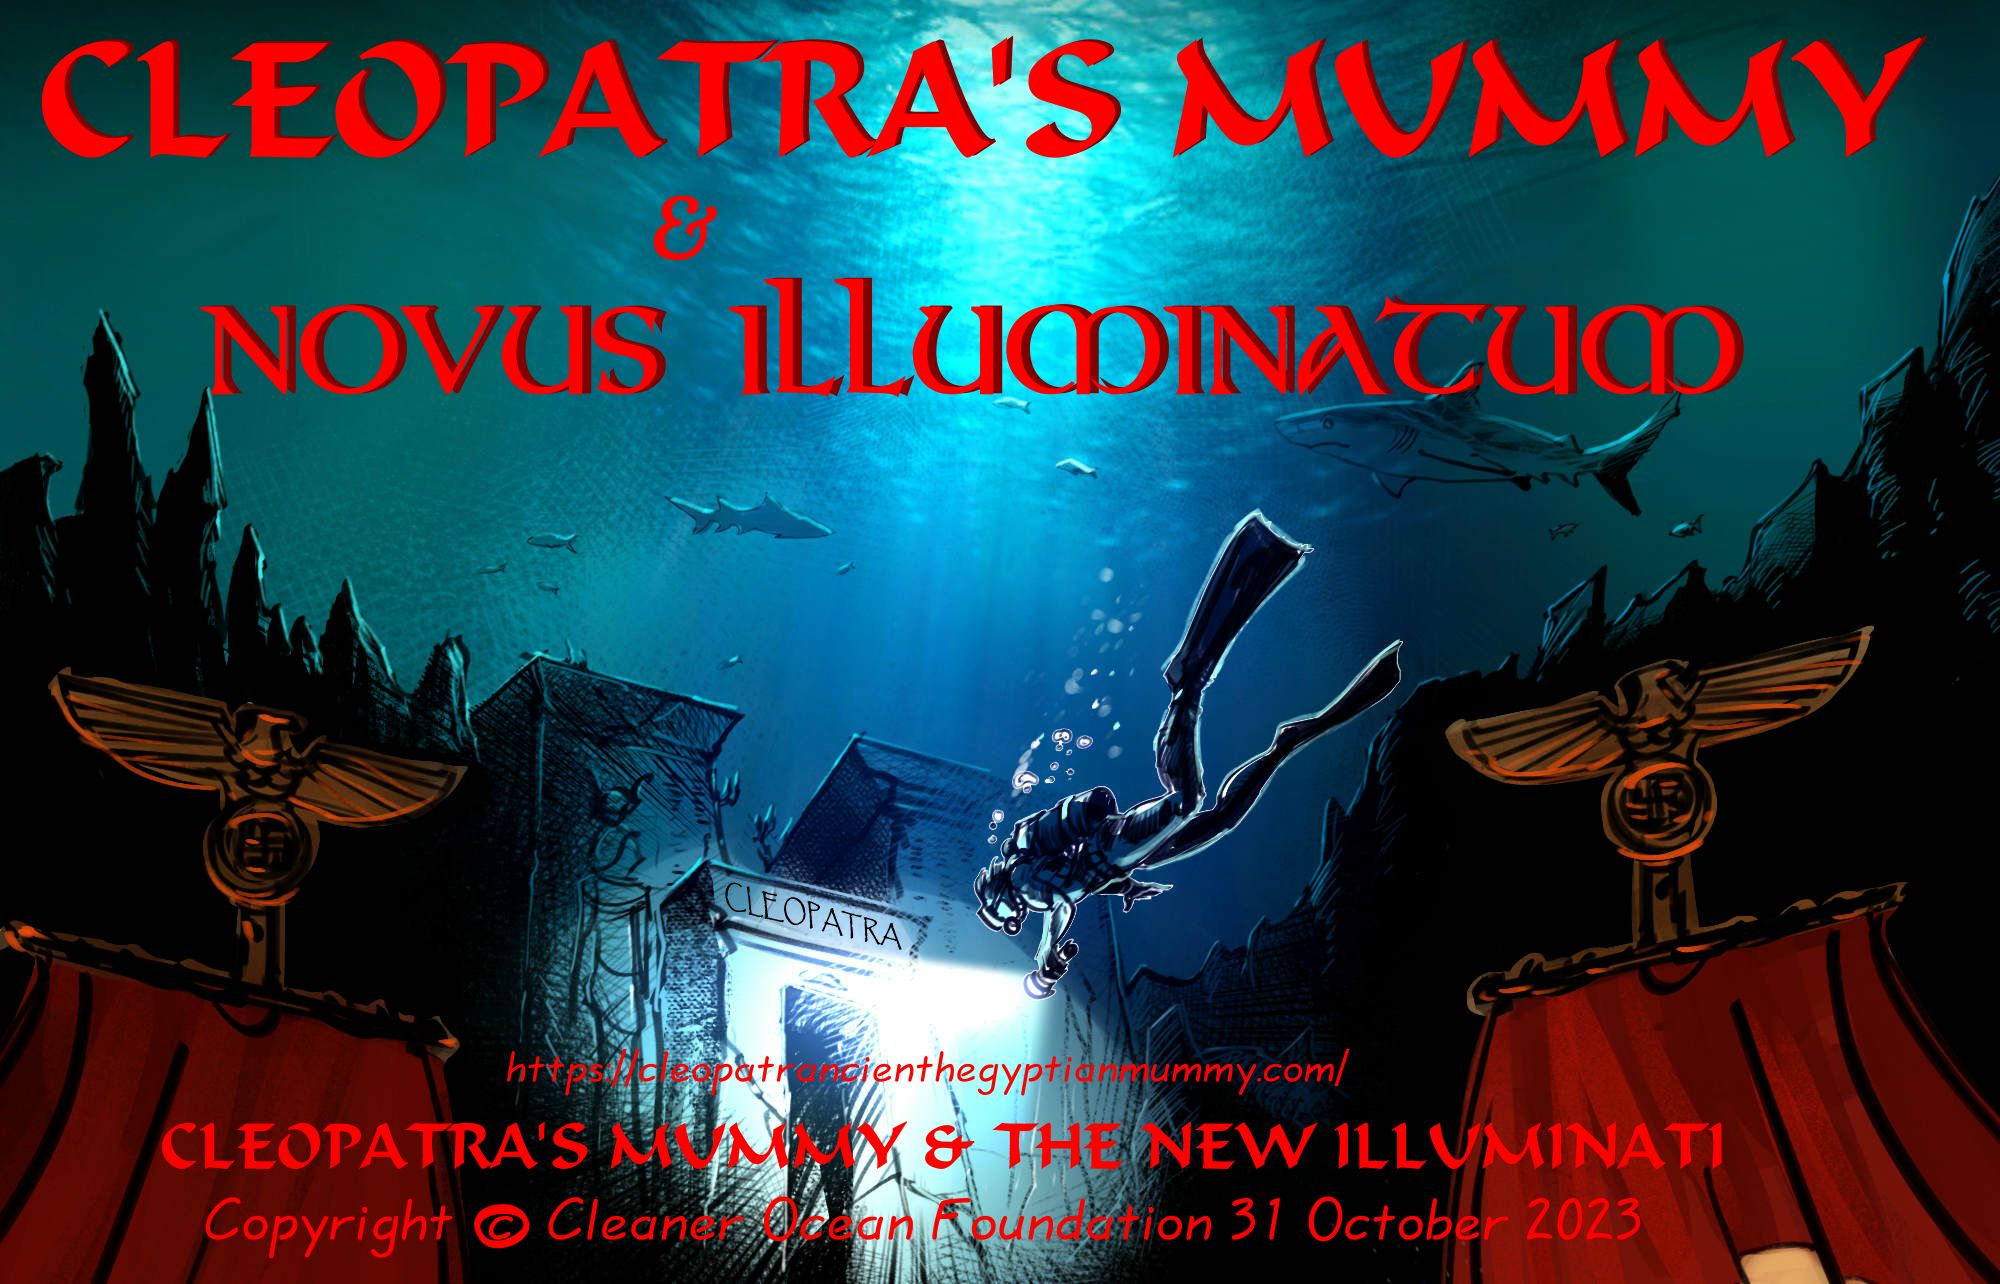 Cleopatra's Mummy and the New Illuminati: Novus Illuminatum - Copyright illustration 31st October 2023 - Cleaner Ocean Foundation - All rights reserved